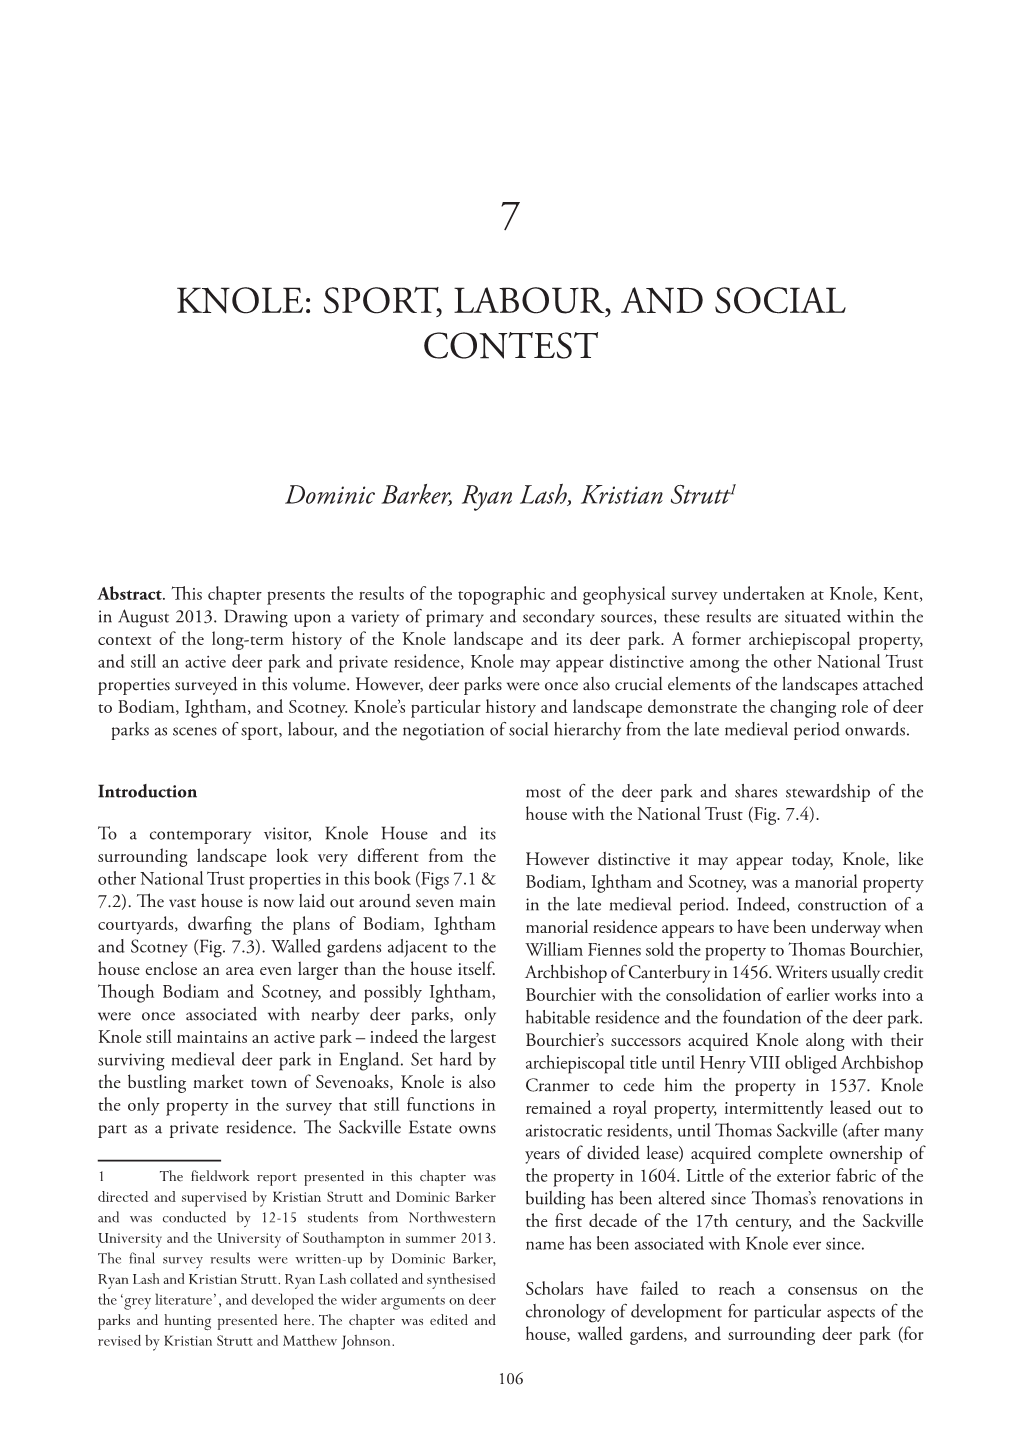 Knole: Sport, Labour, and Social Contest